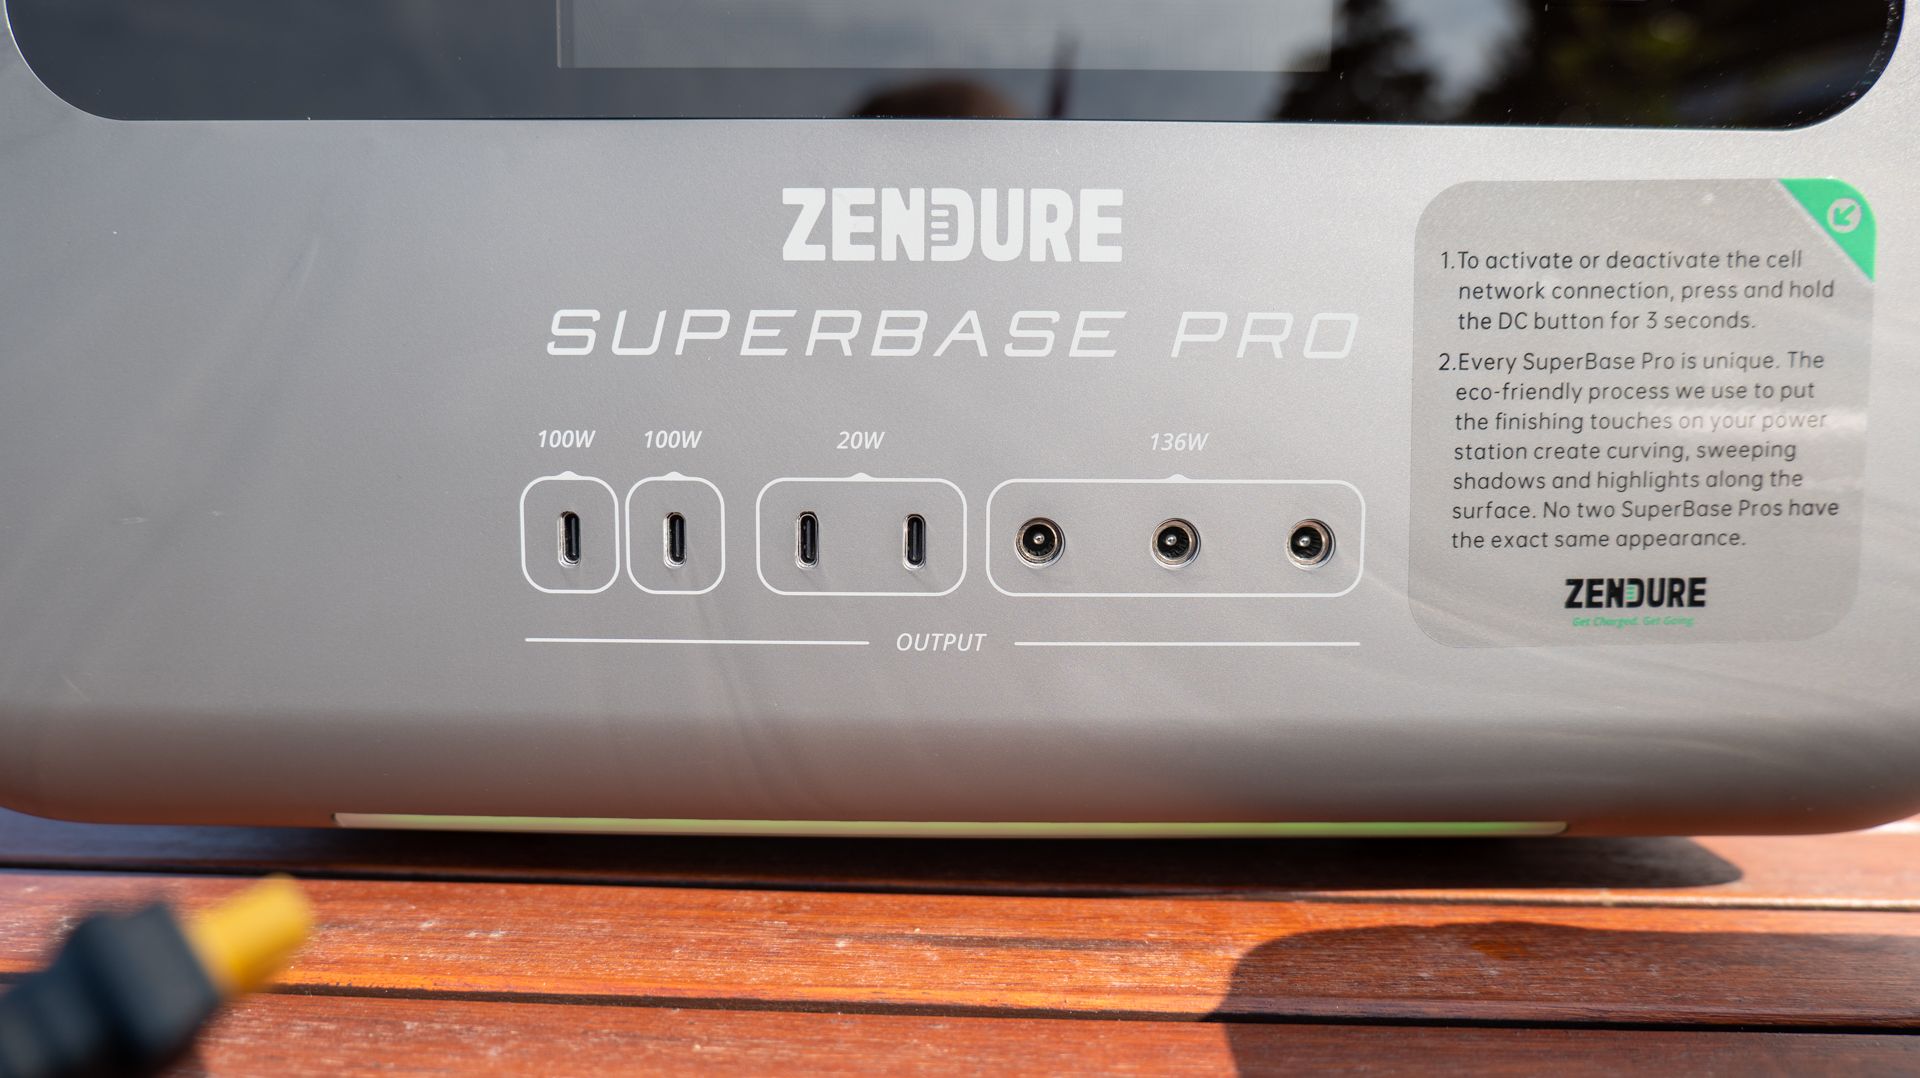 zendure superbase pro 2000 - outputs